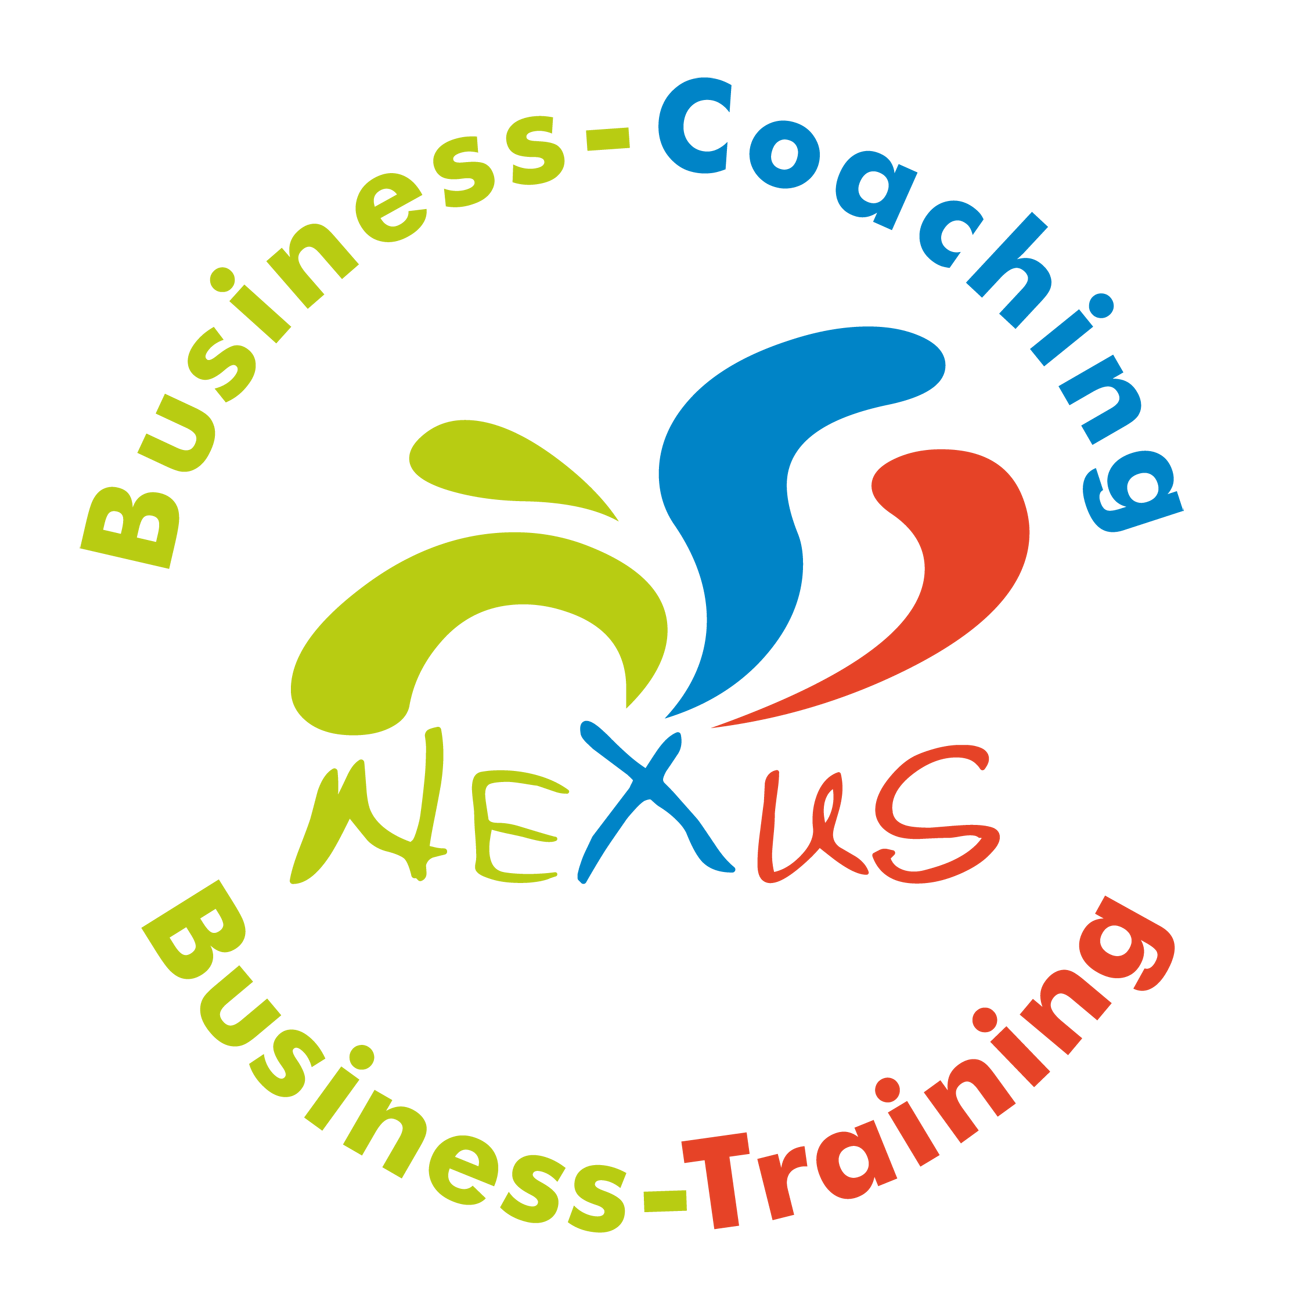 Business-Coaching Plankstadt, Führungskräfte-Coaching, Führungskräftetraining, Persönlichkeitstraining